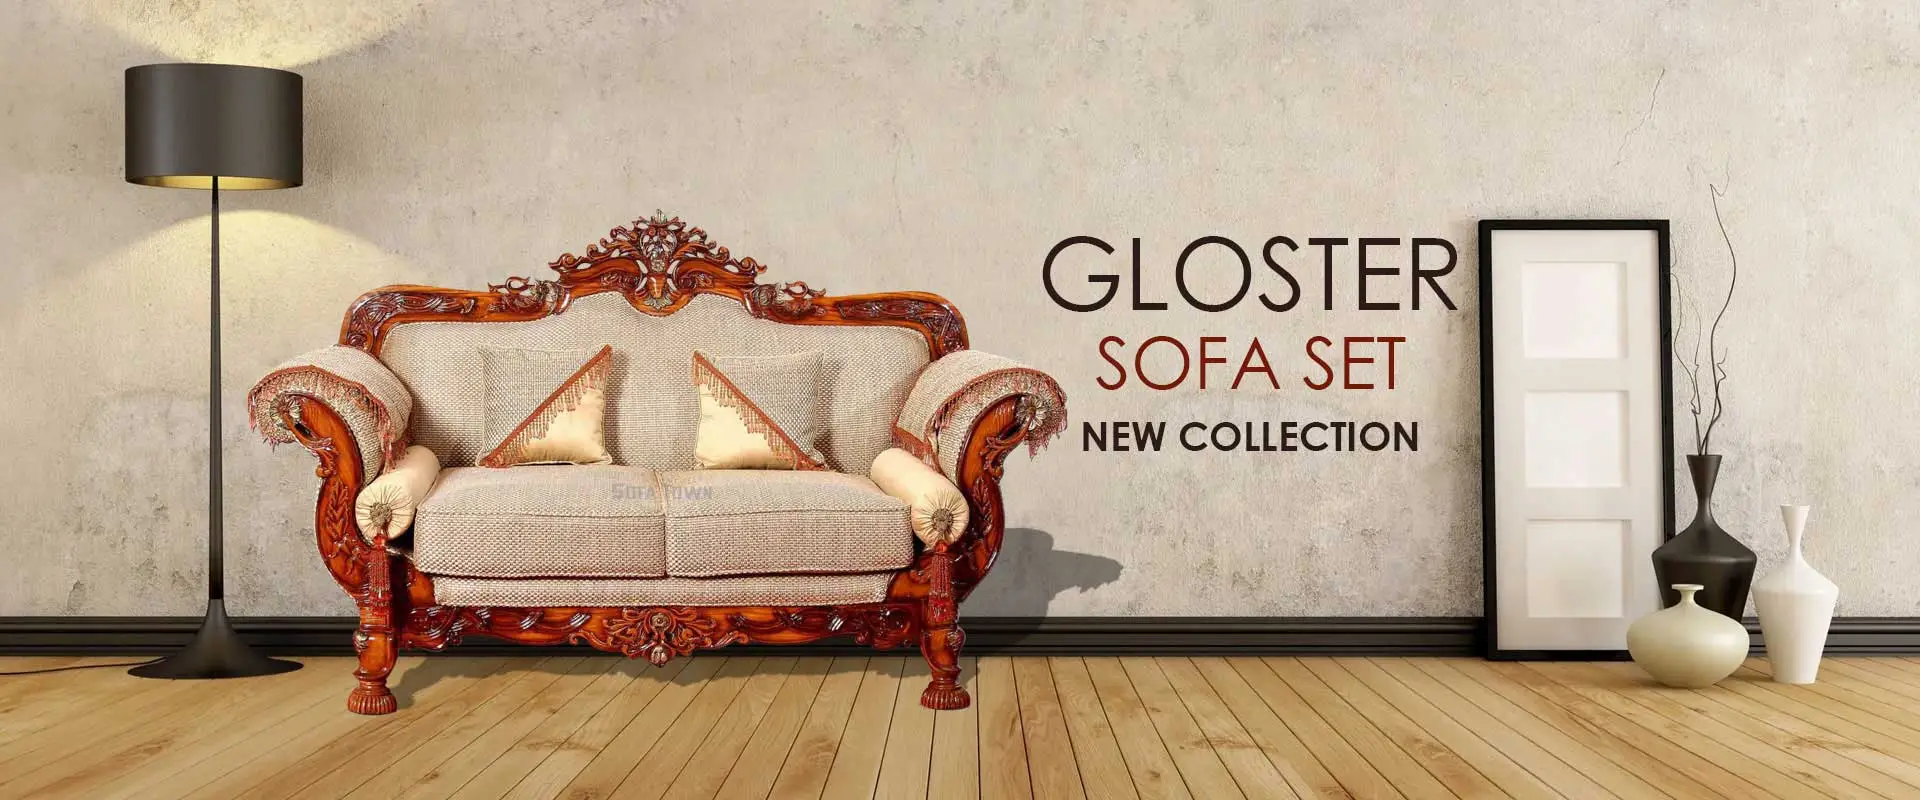 Gloster Sofa Set  Manufacturers in Chandigarh